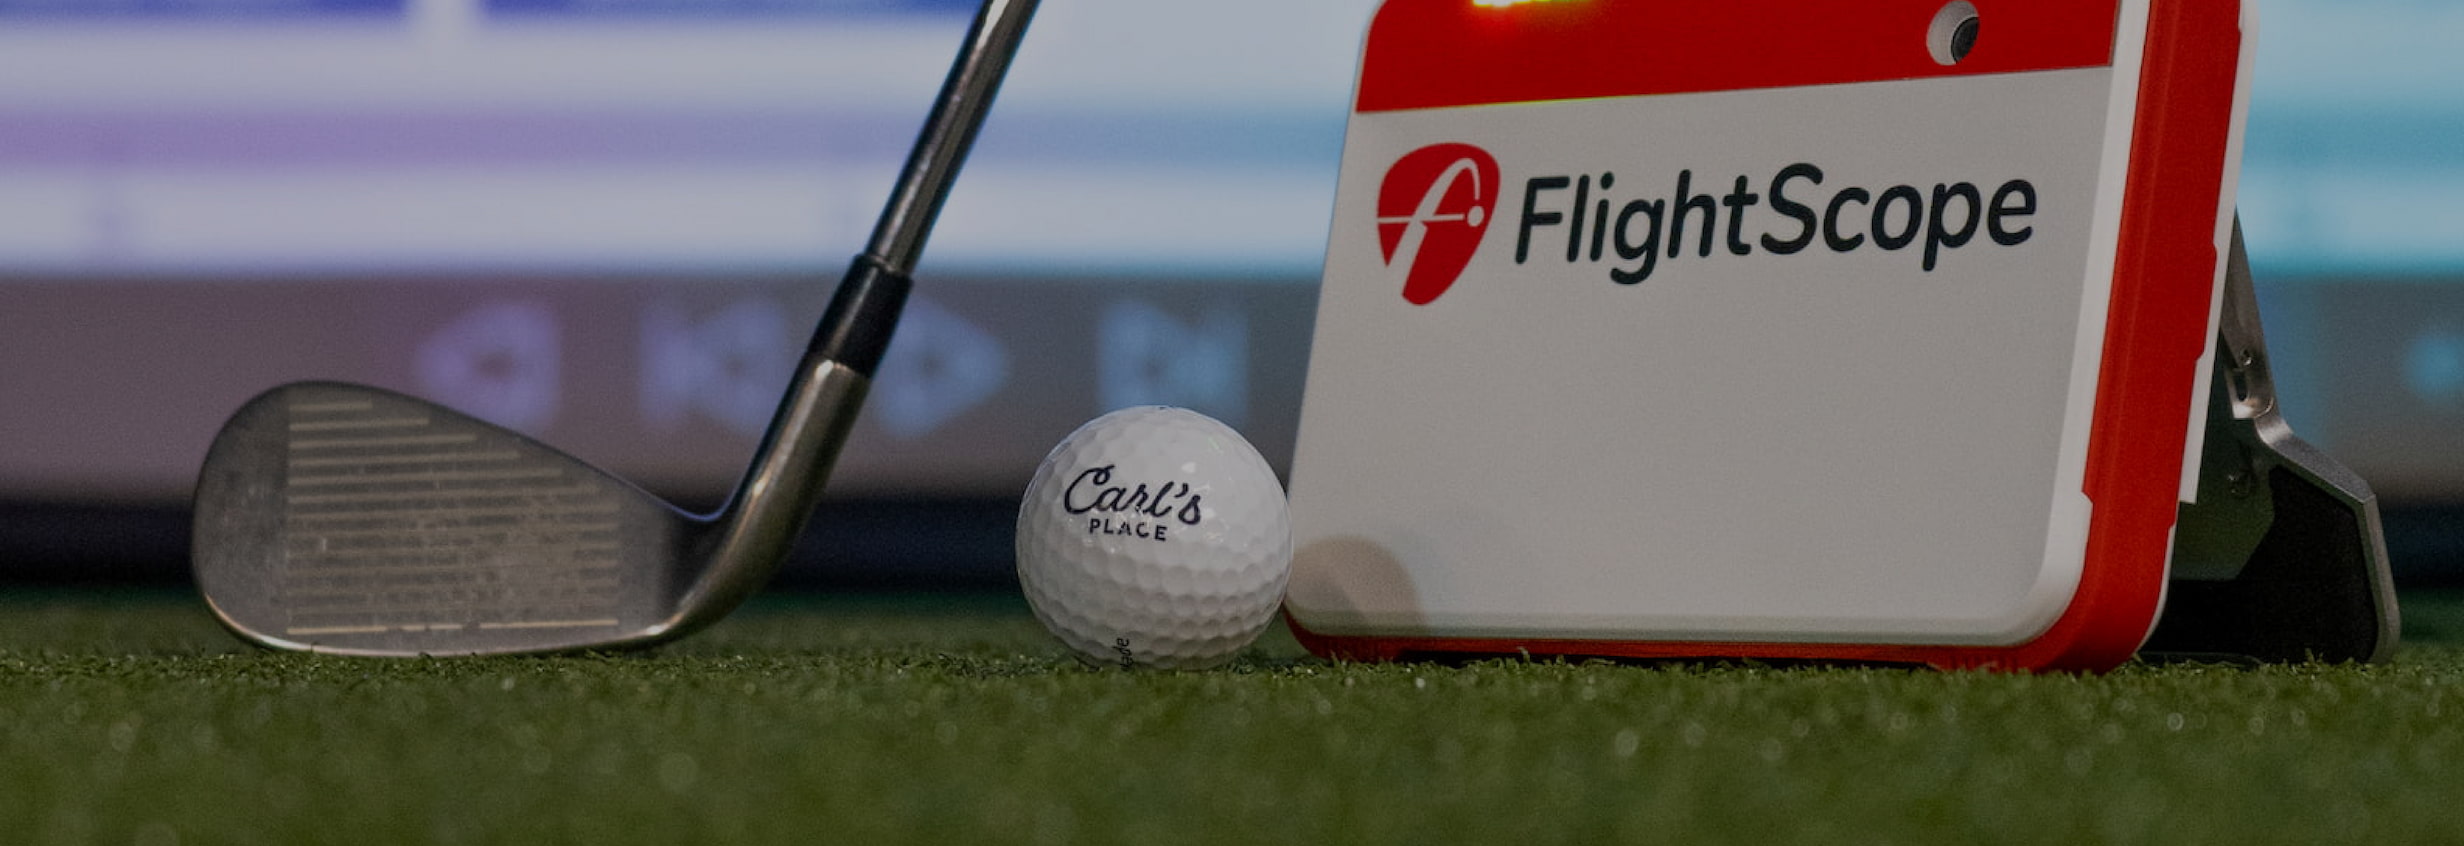 FlightScope Golf Simulators